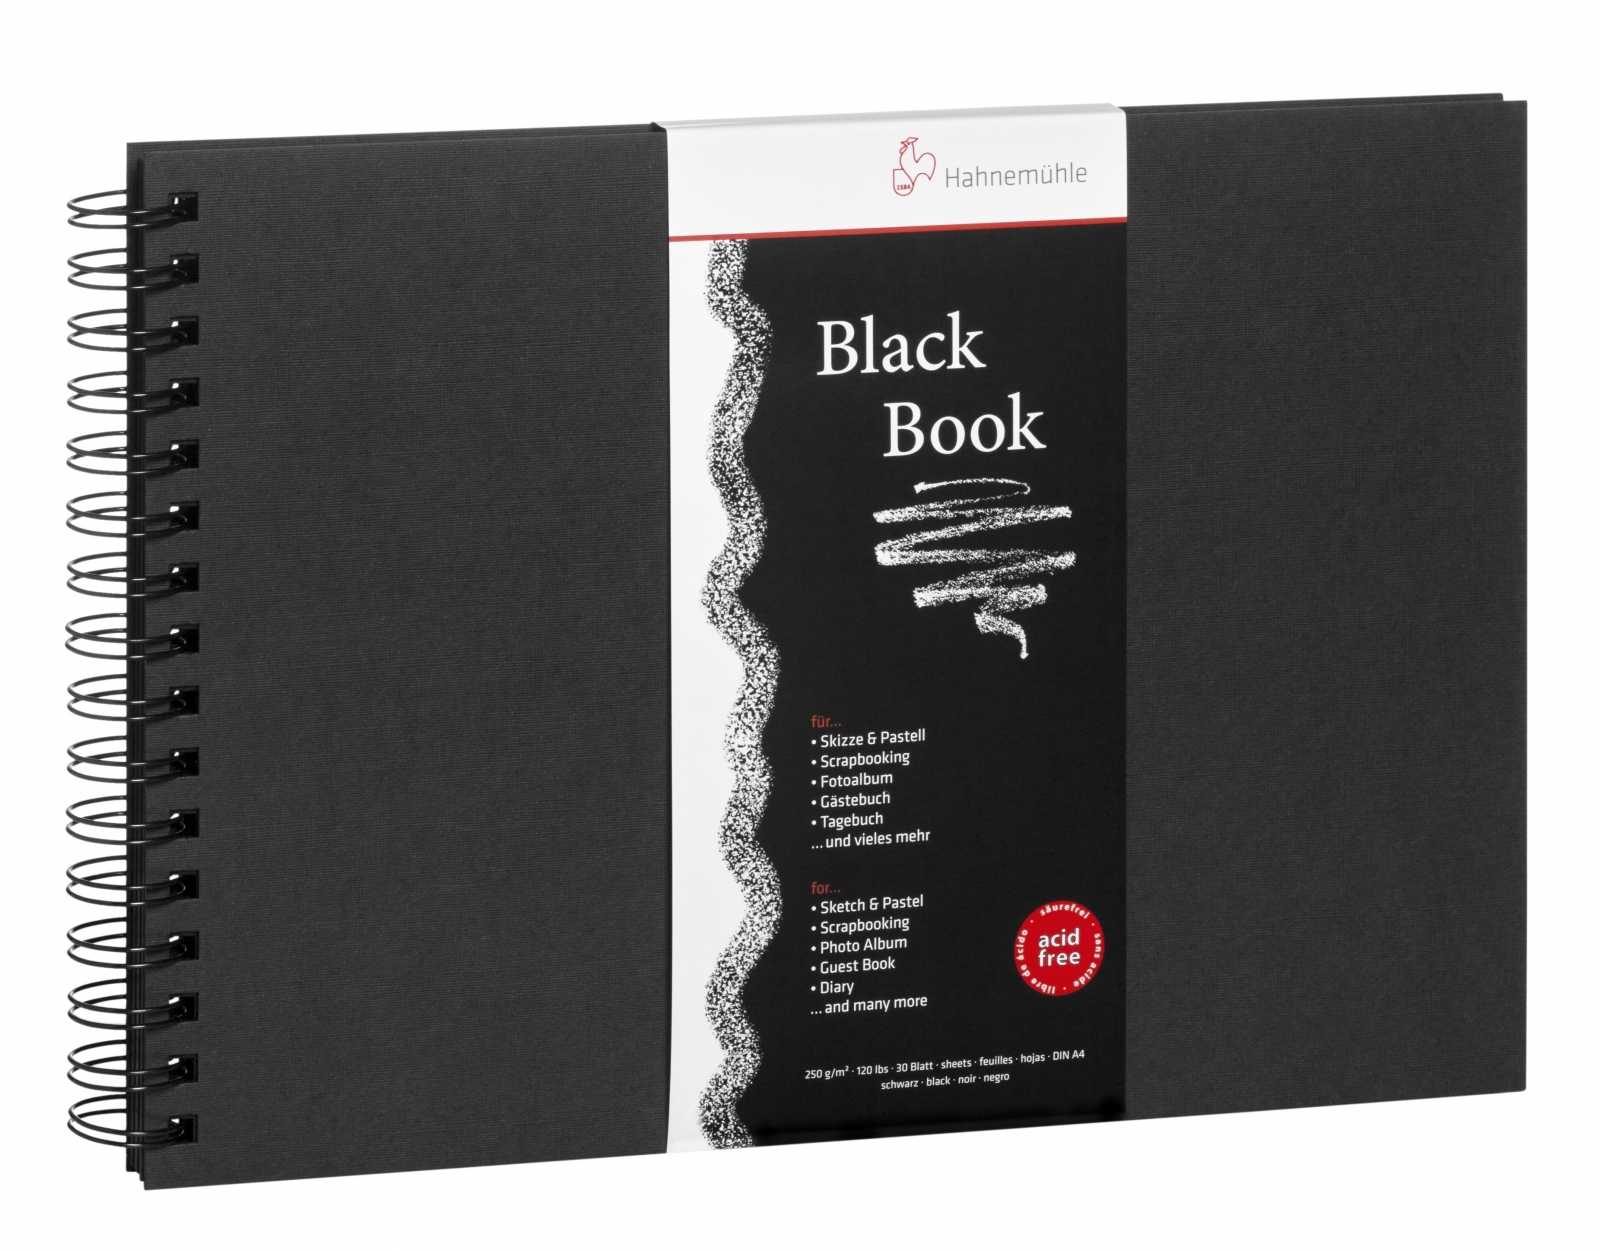 Black Book Hahnemuhle 250g/m2 A4(21x29,7cm) 30fls